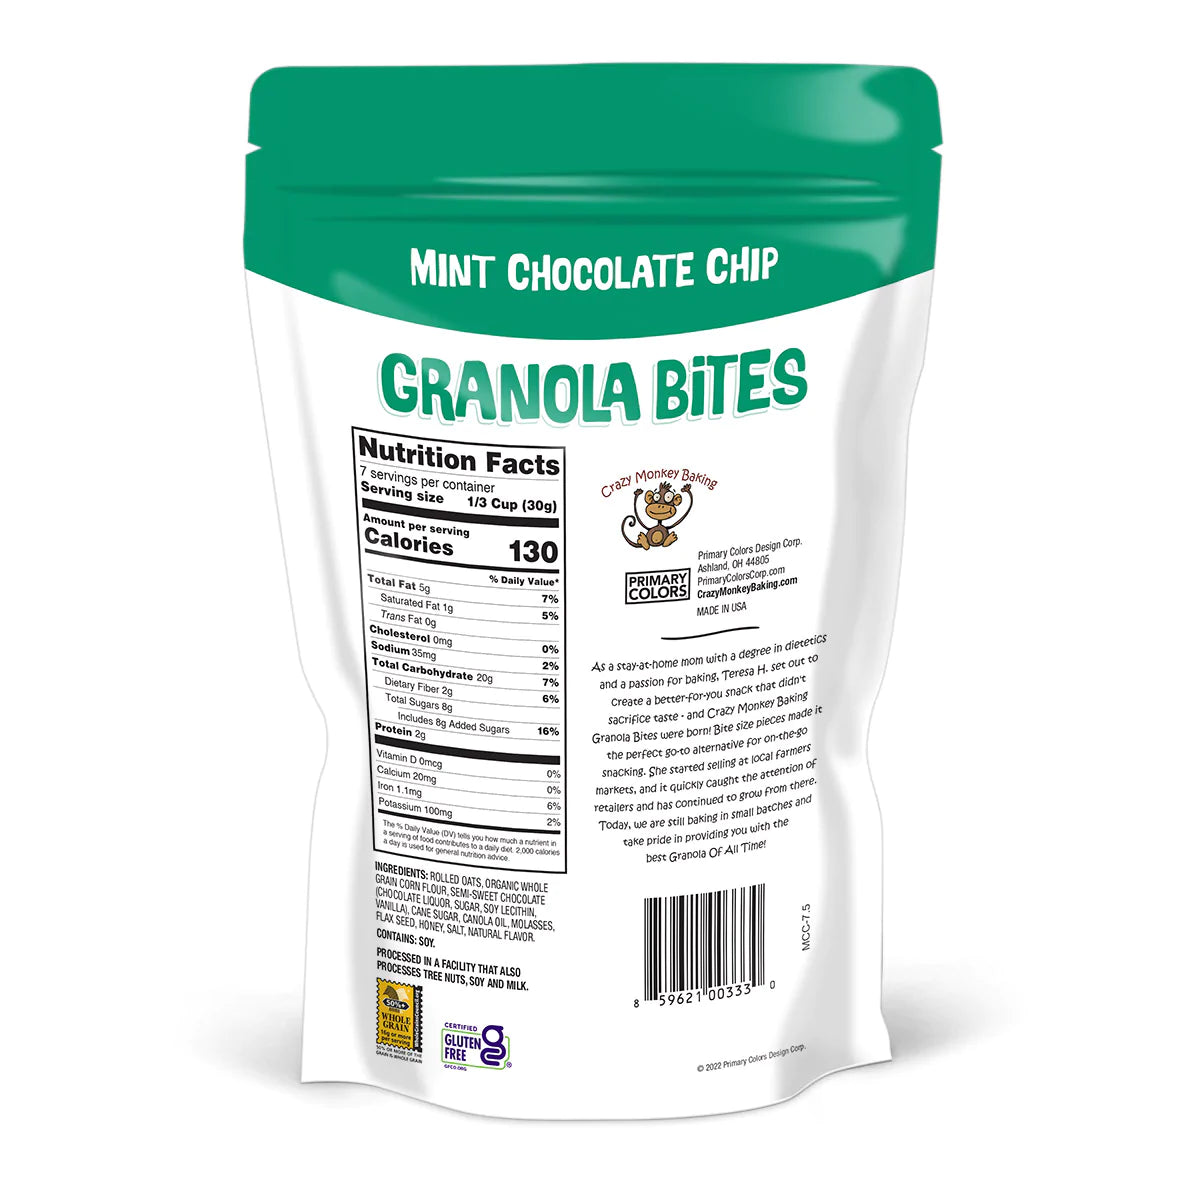 Granola Bites - Mint Chocolate Chip